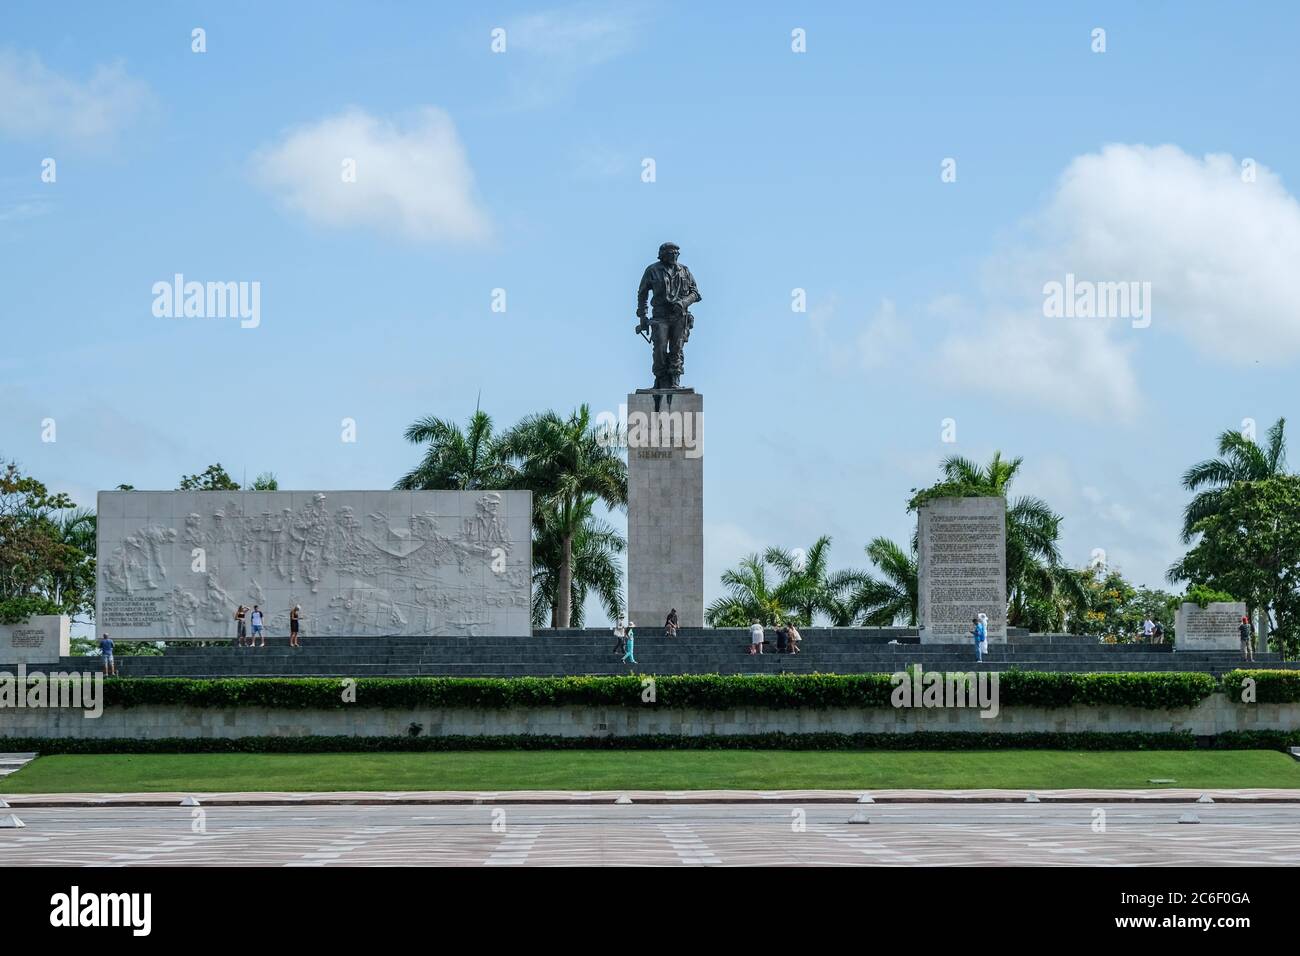 The Che Guevara Mausoleum and statue in Santa Clara, Cuba. Stock Photo